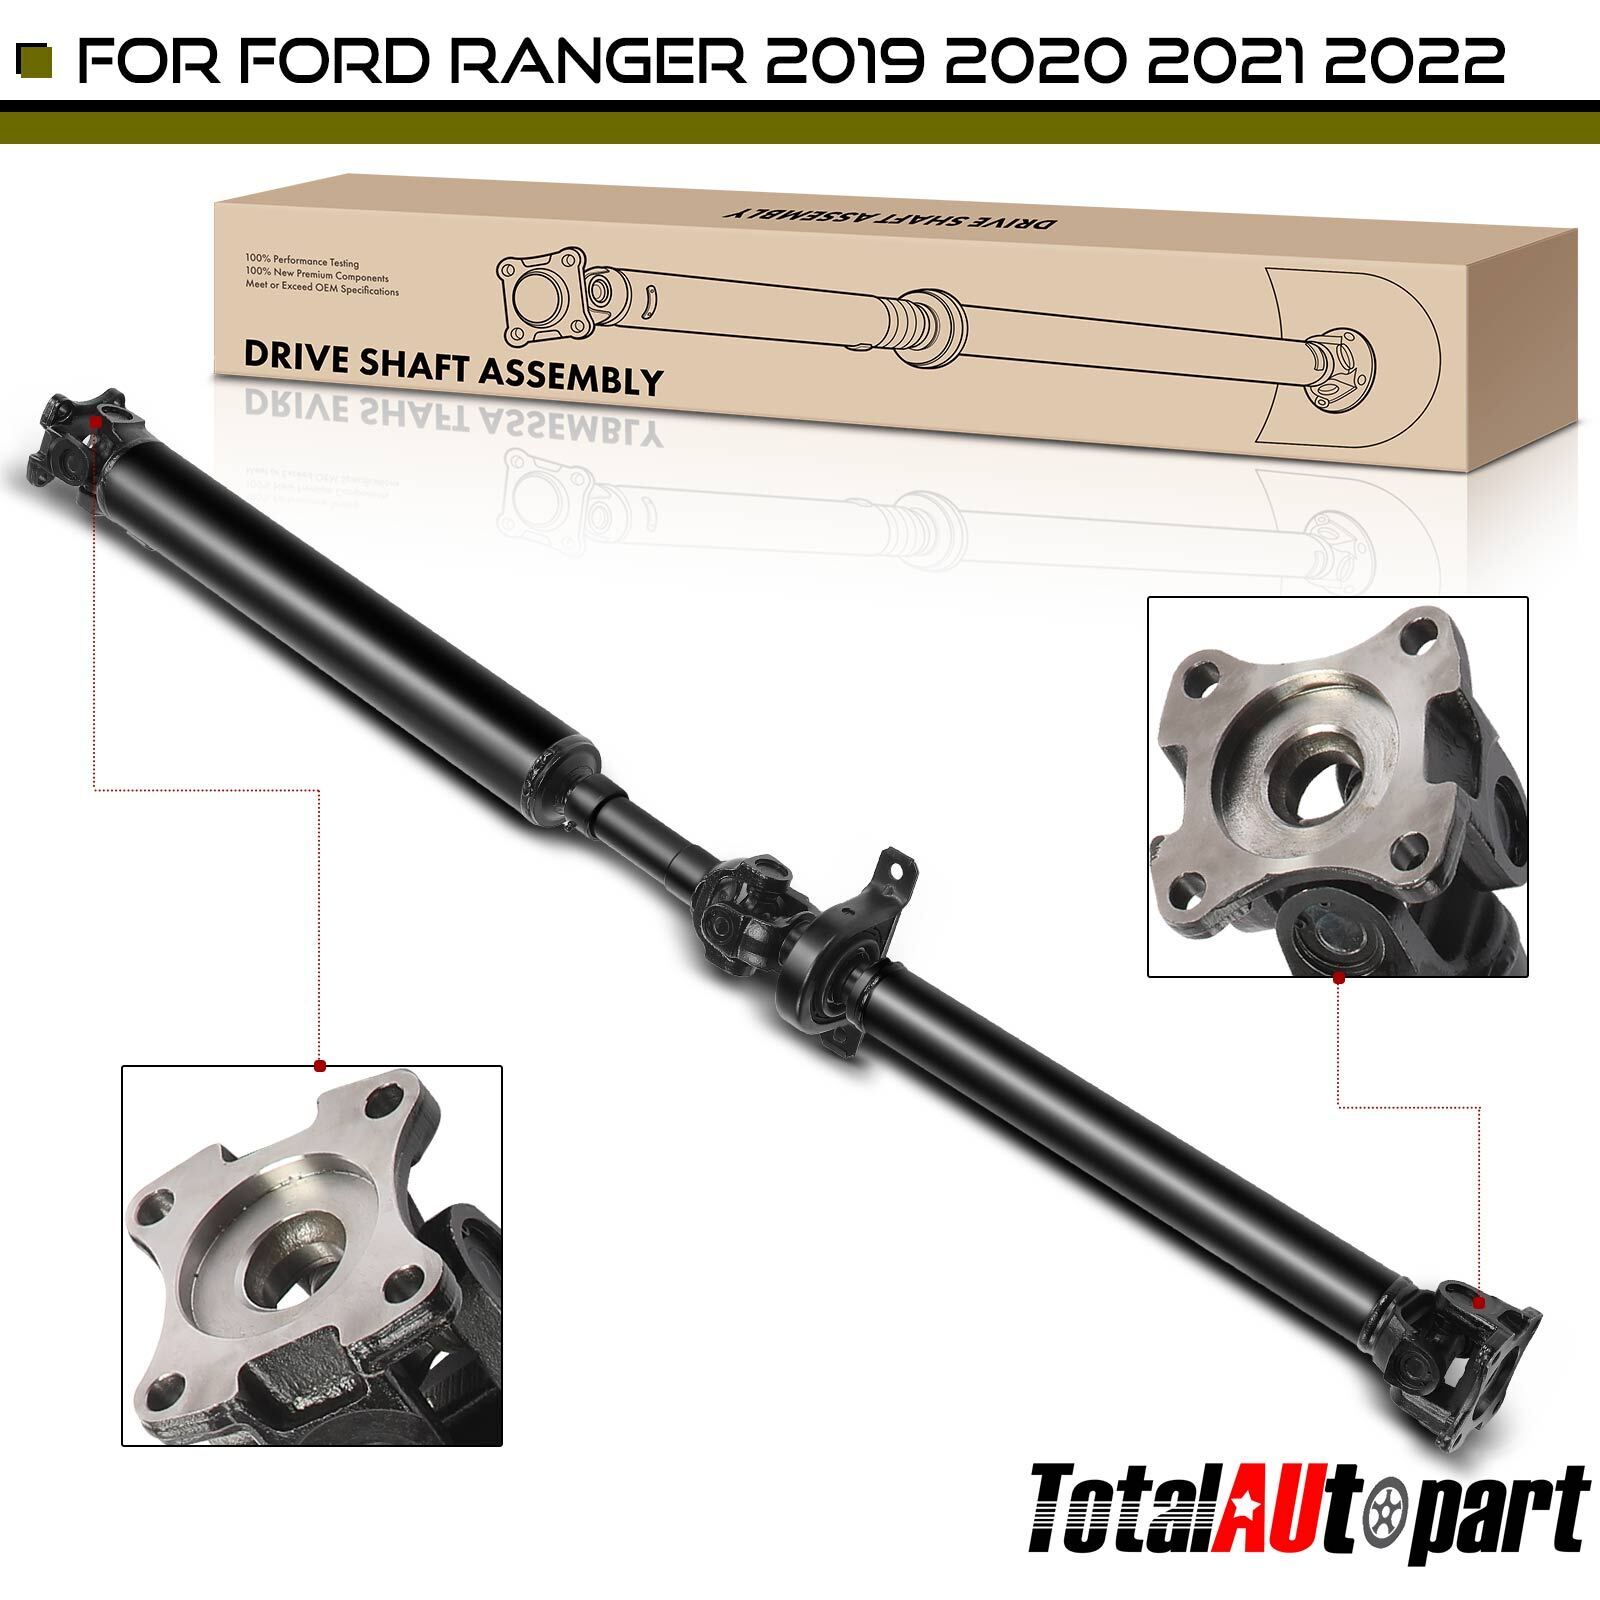 New Drive Shaft Assembly for Ford Ranger 2019-2022 4x4 Rear Driver % Passenger